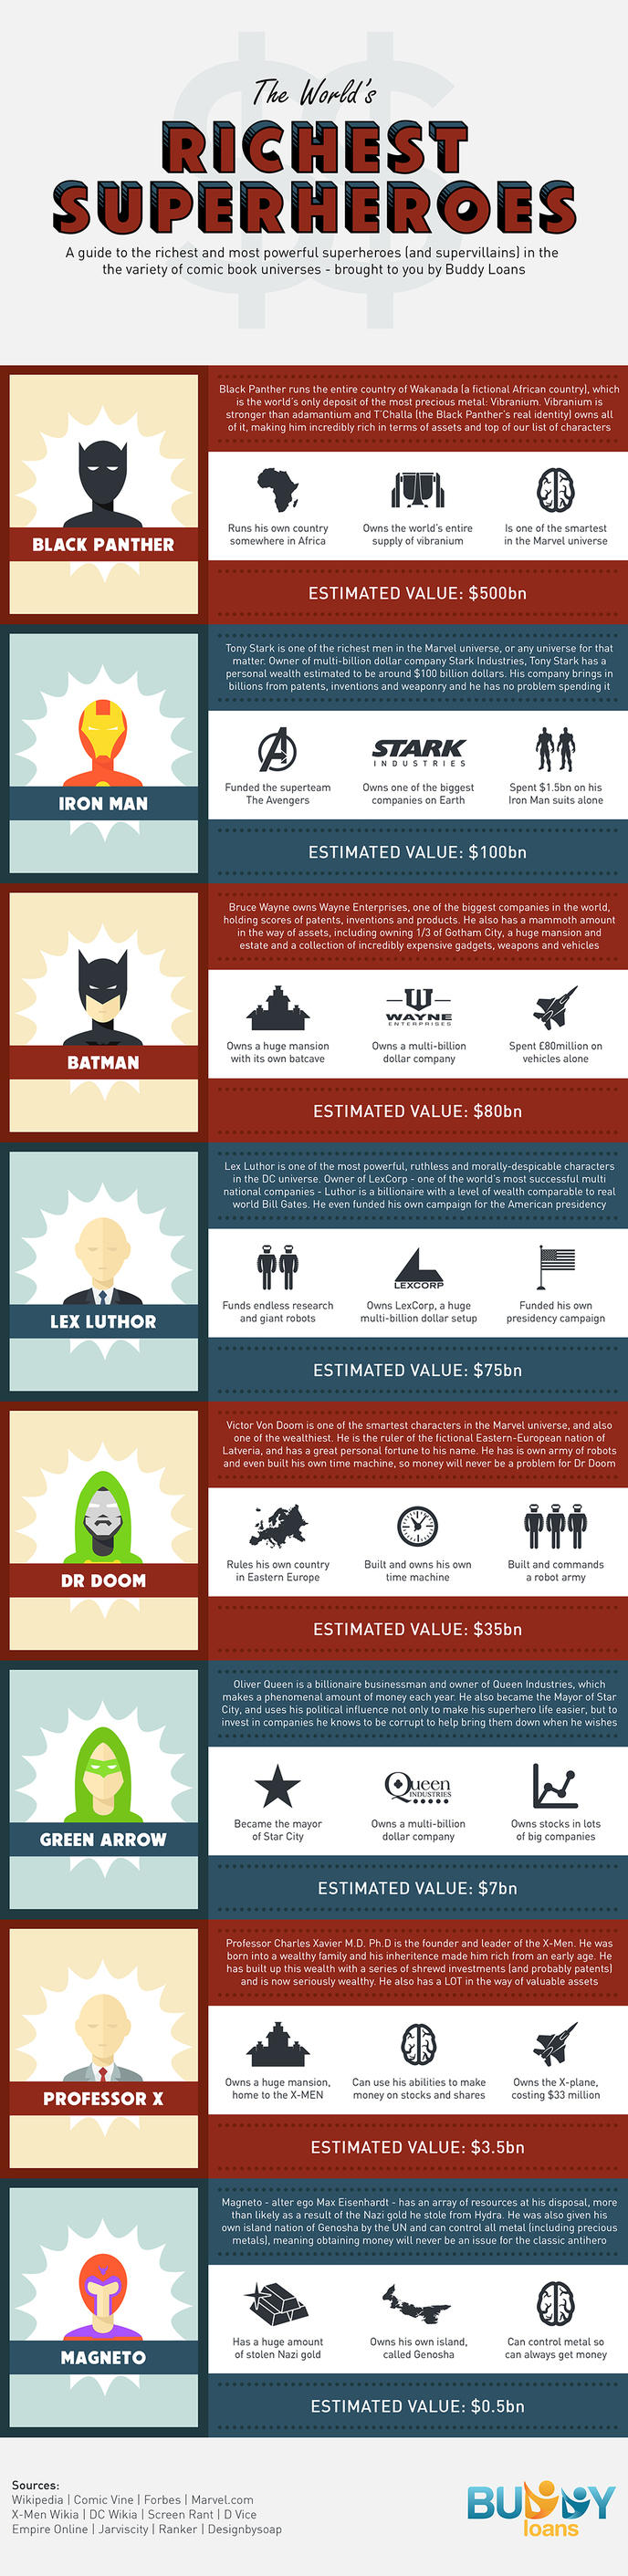 w_richest-superheroes